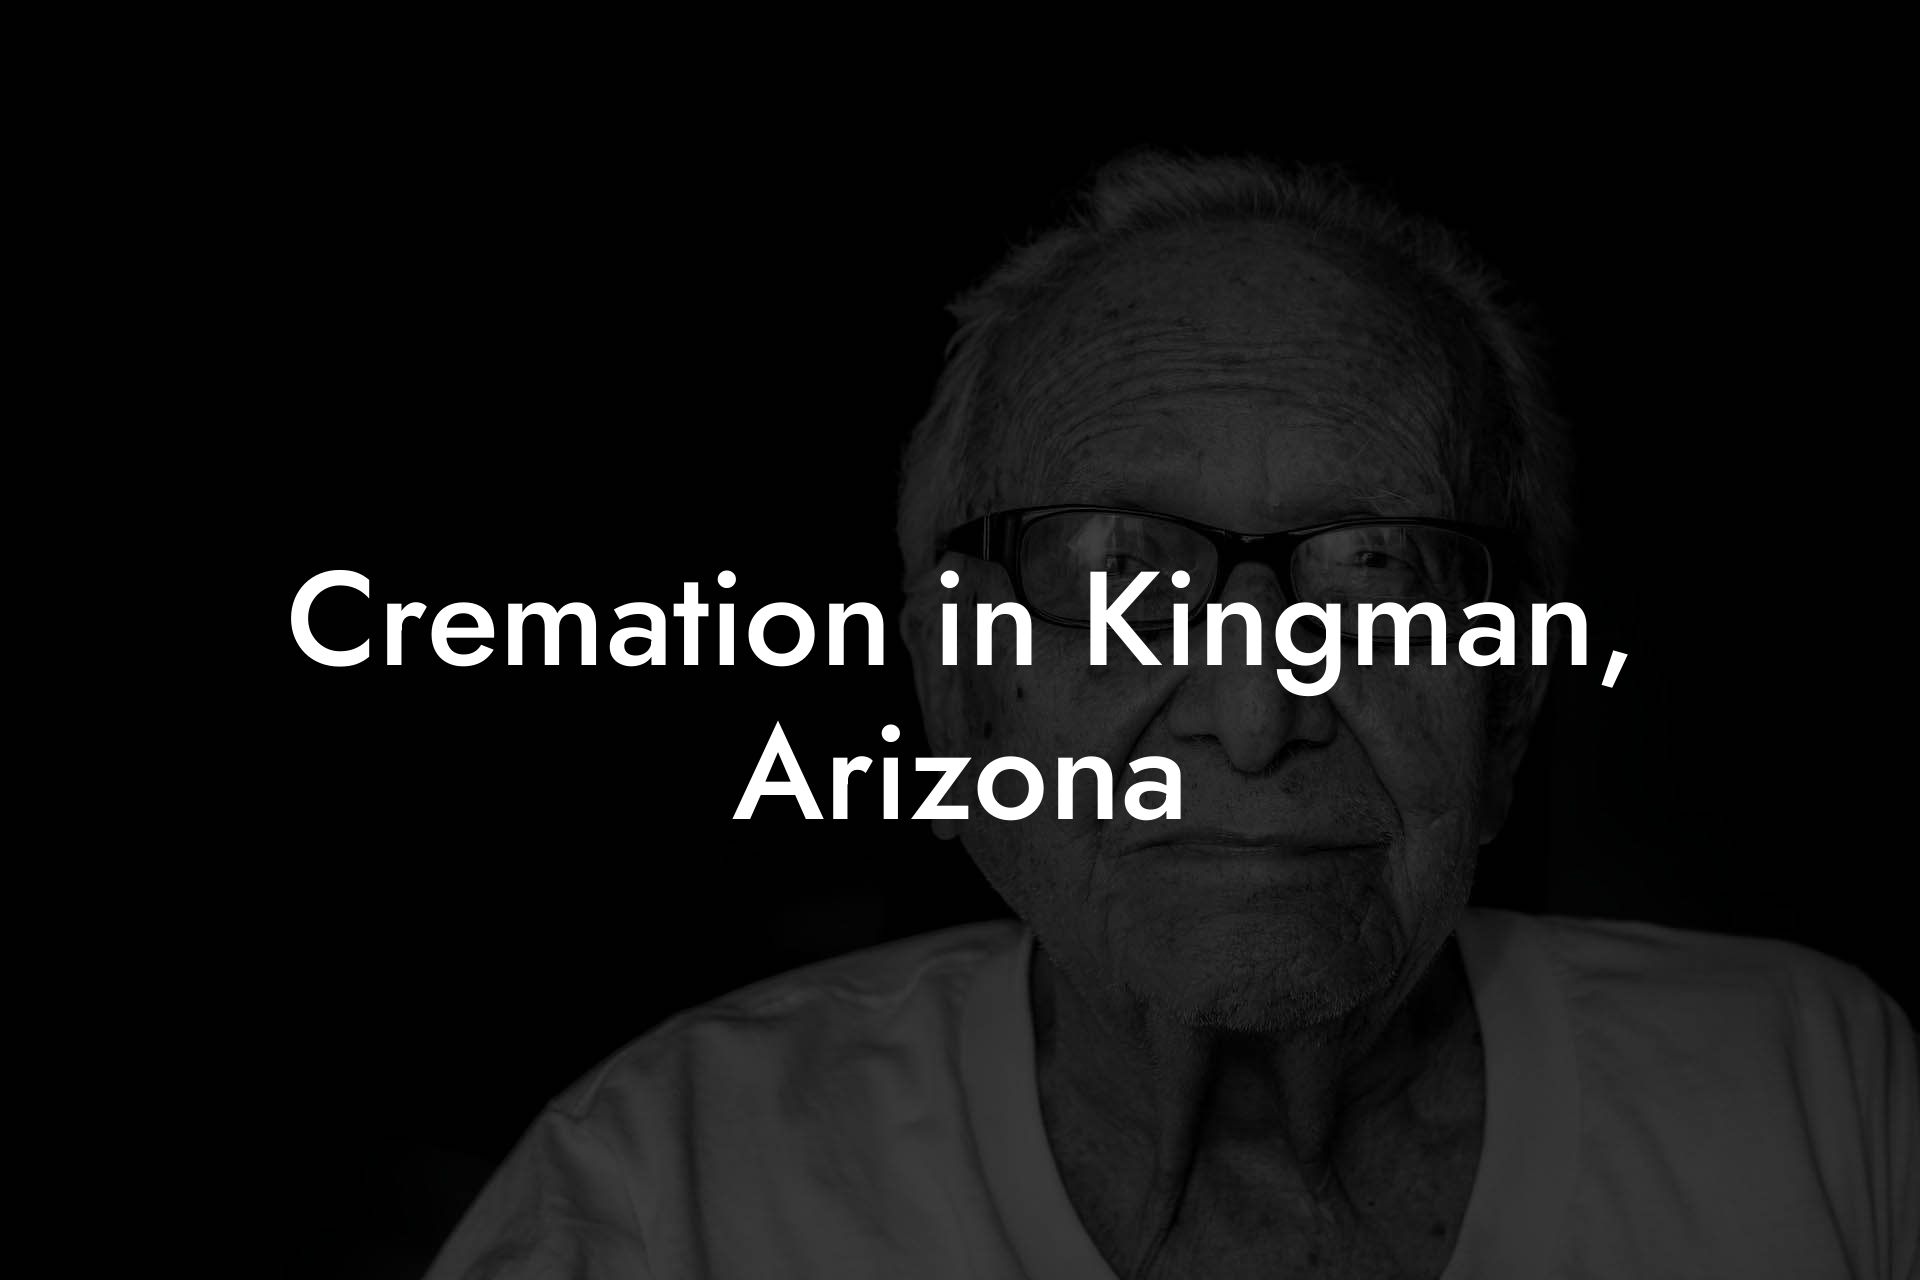 Cremation in Kingman, Arizona